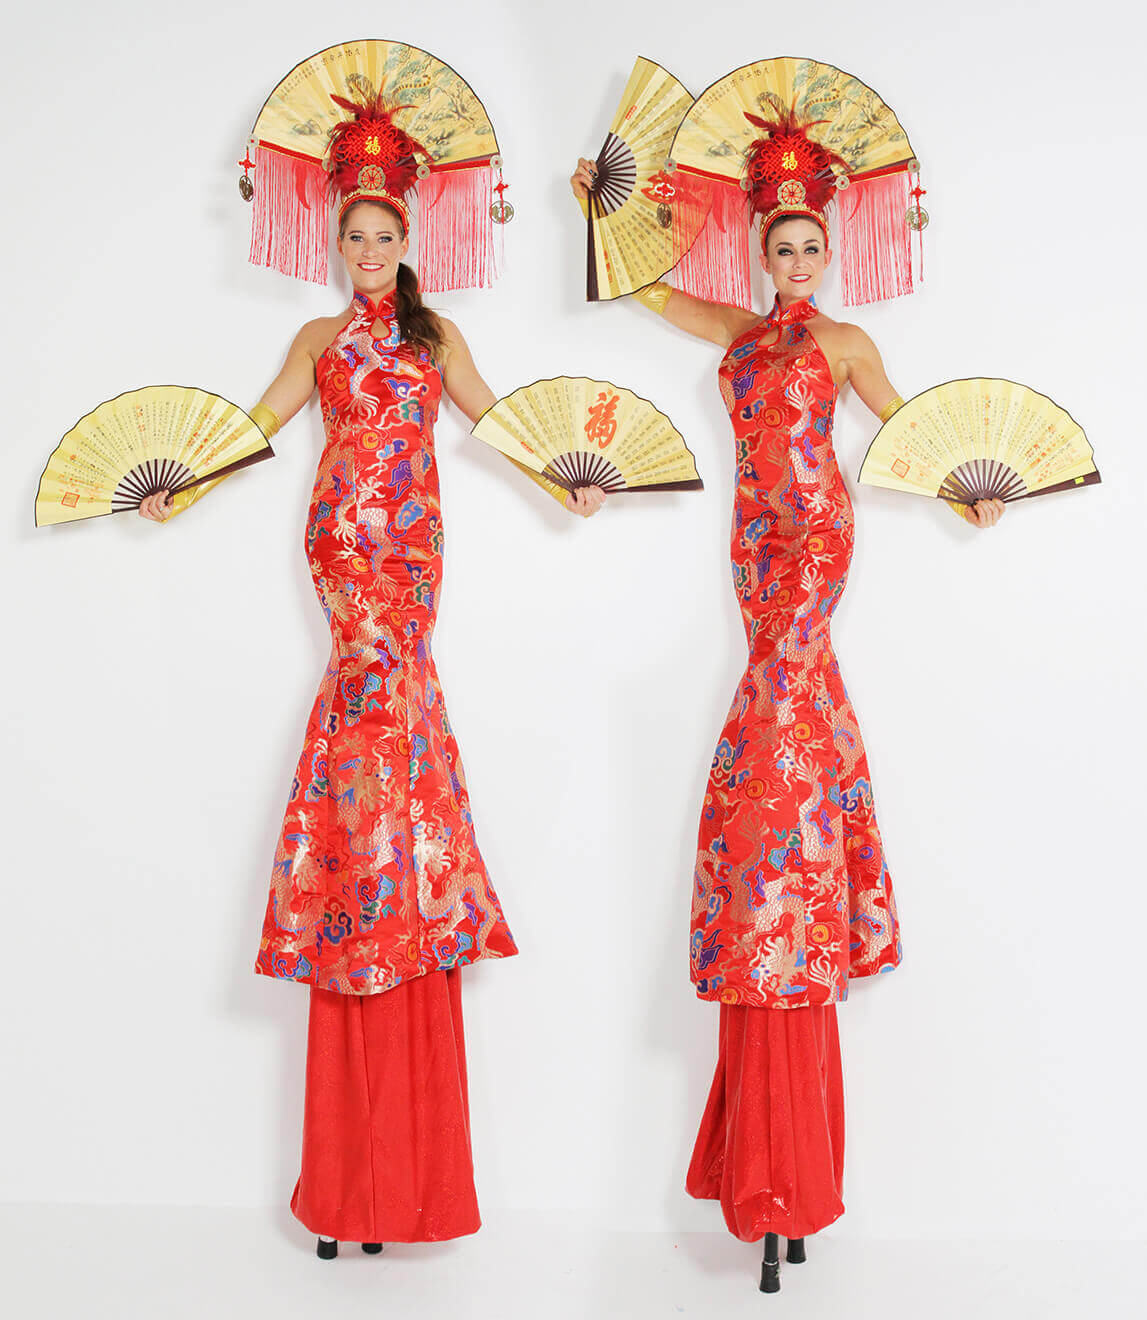 China Doll Stilt Walkers